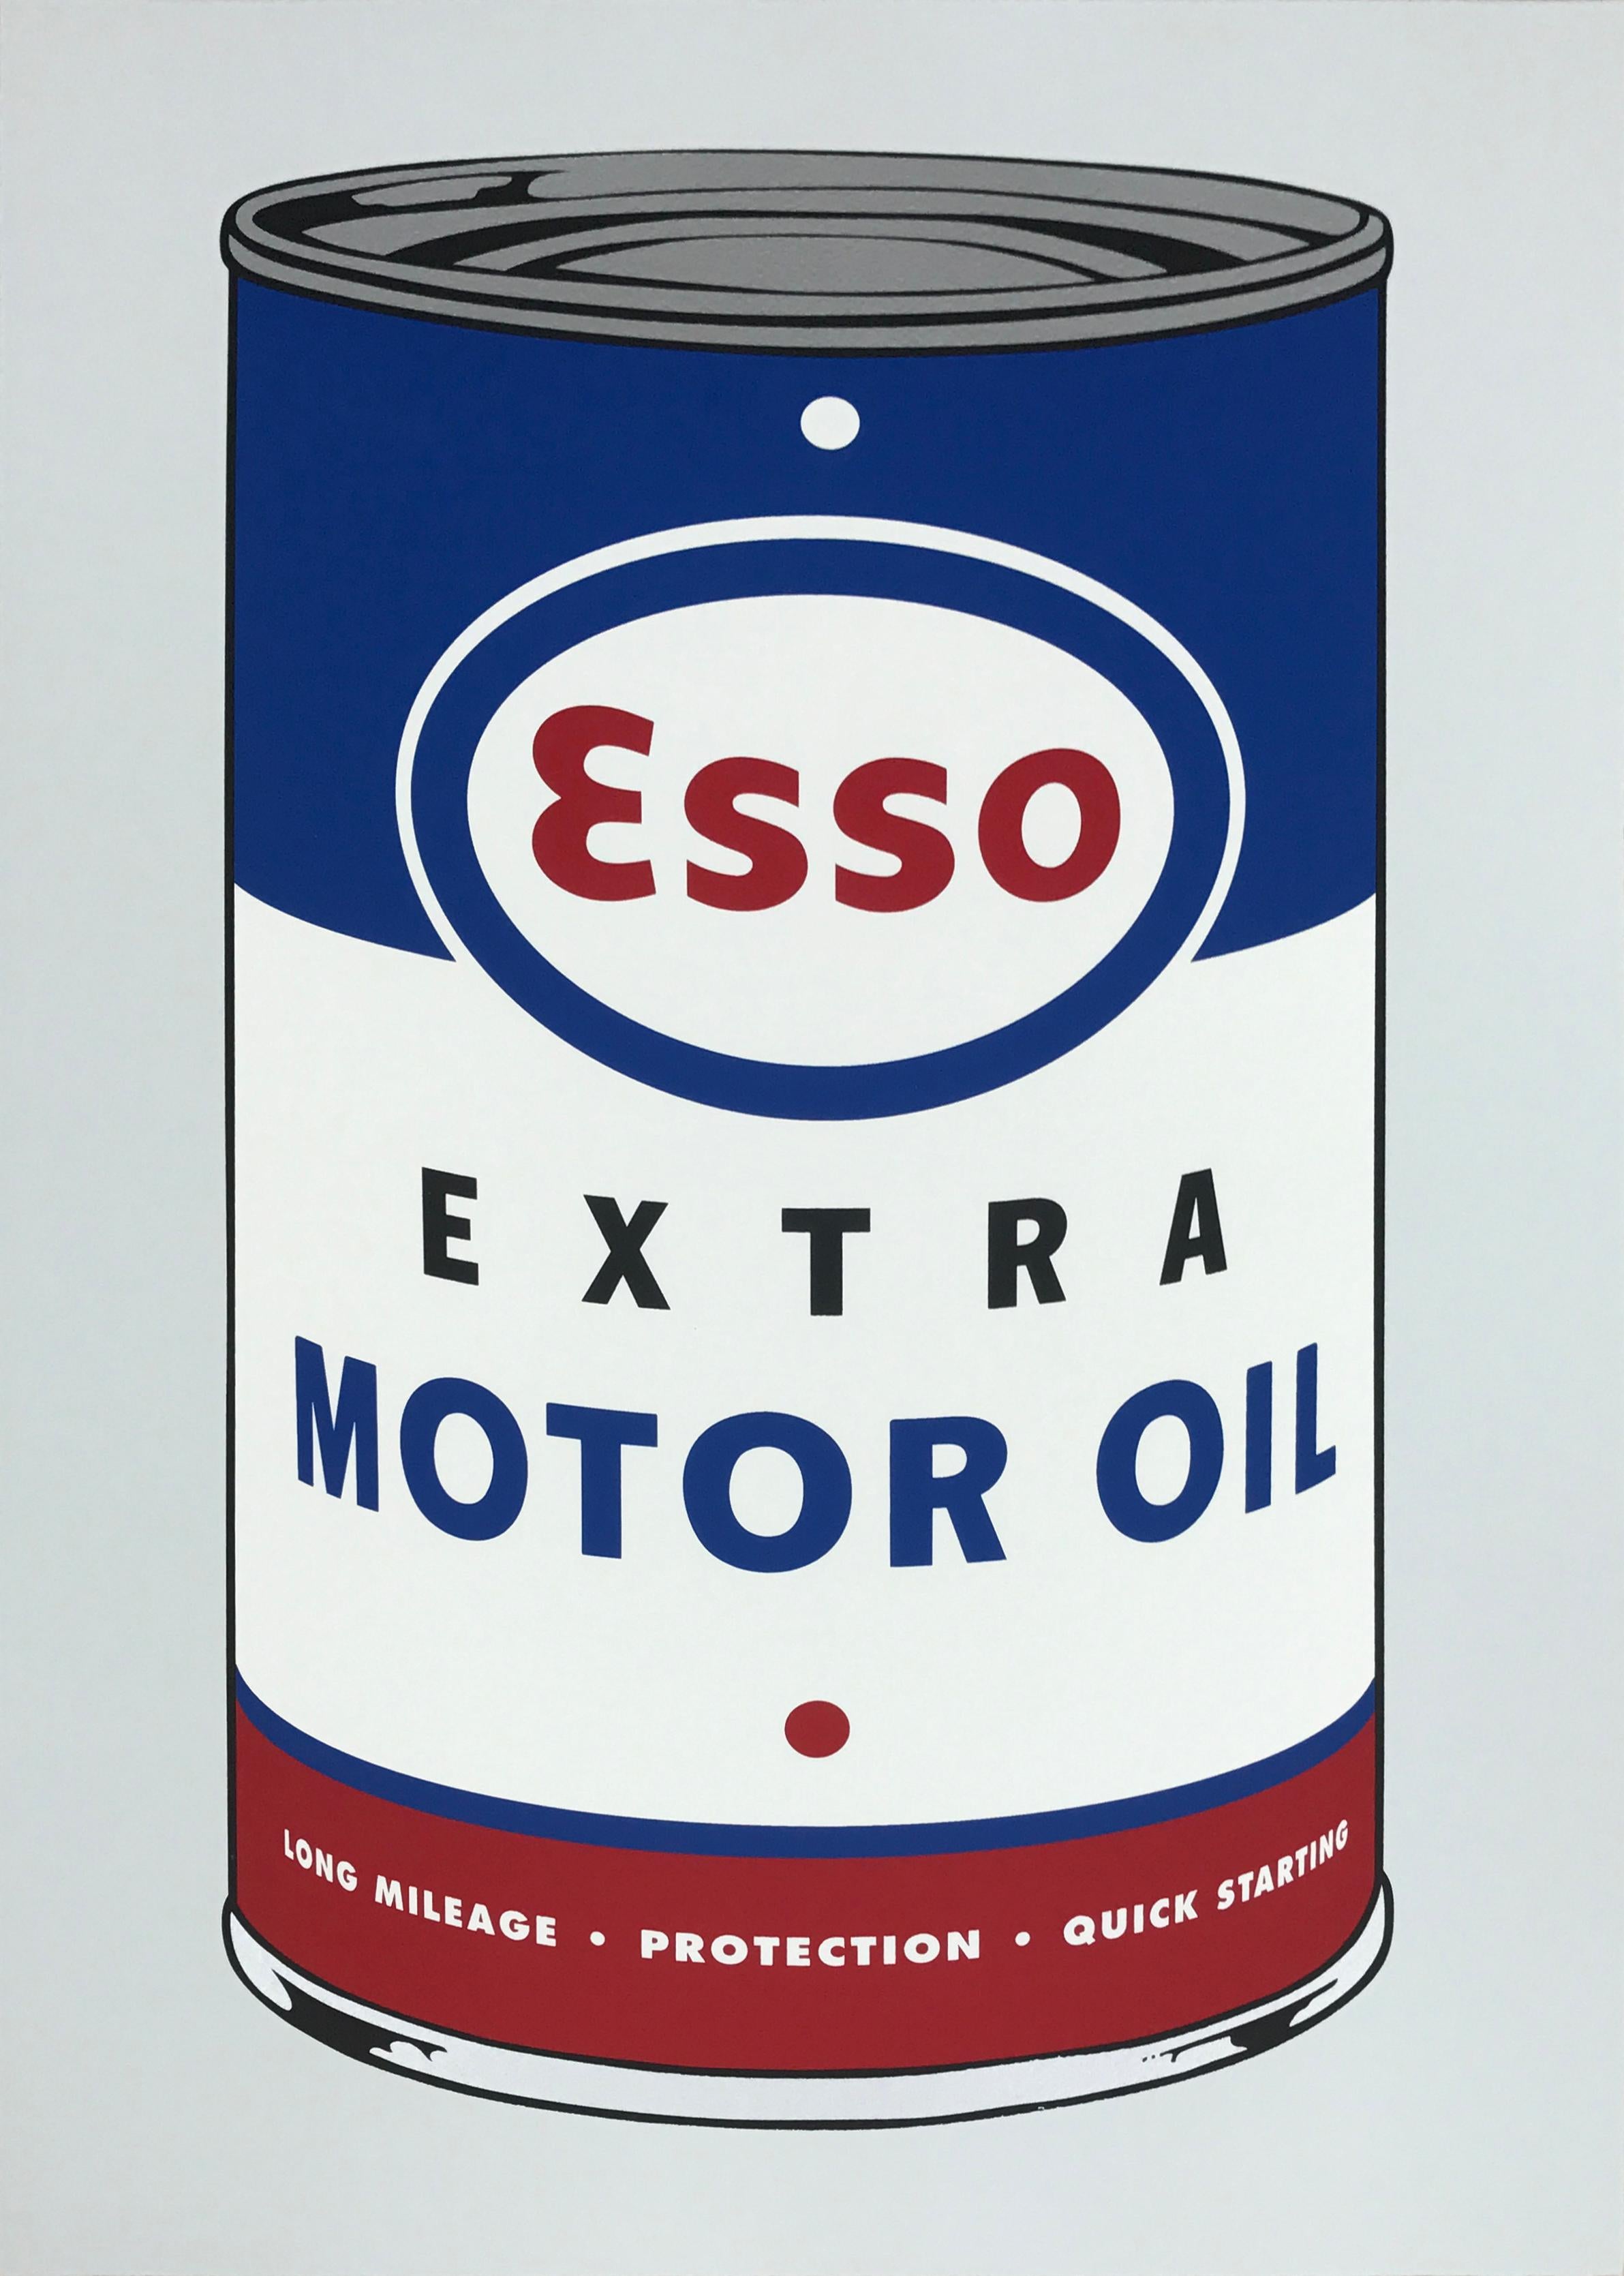 Esso Extra Motor Oil - Print by Heiner Meyer